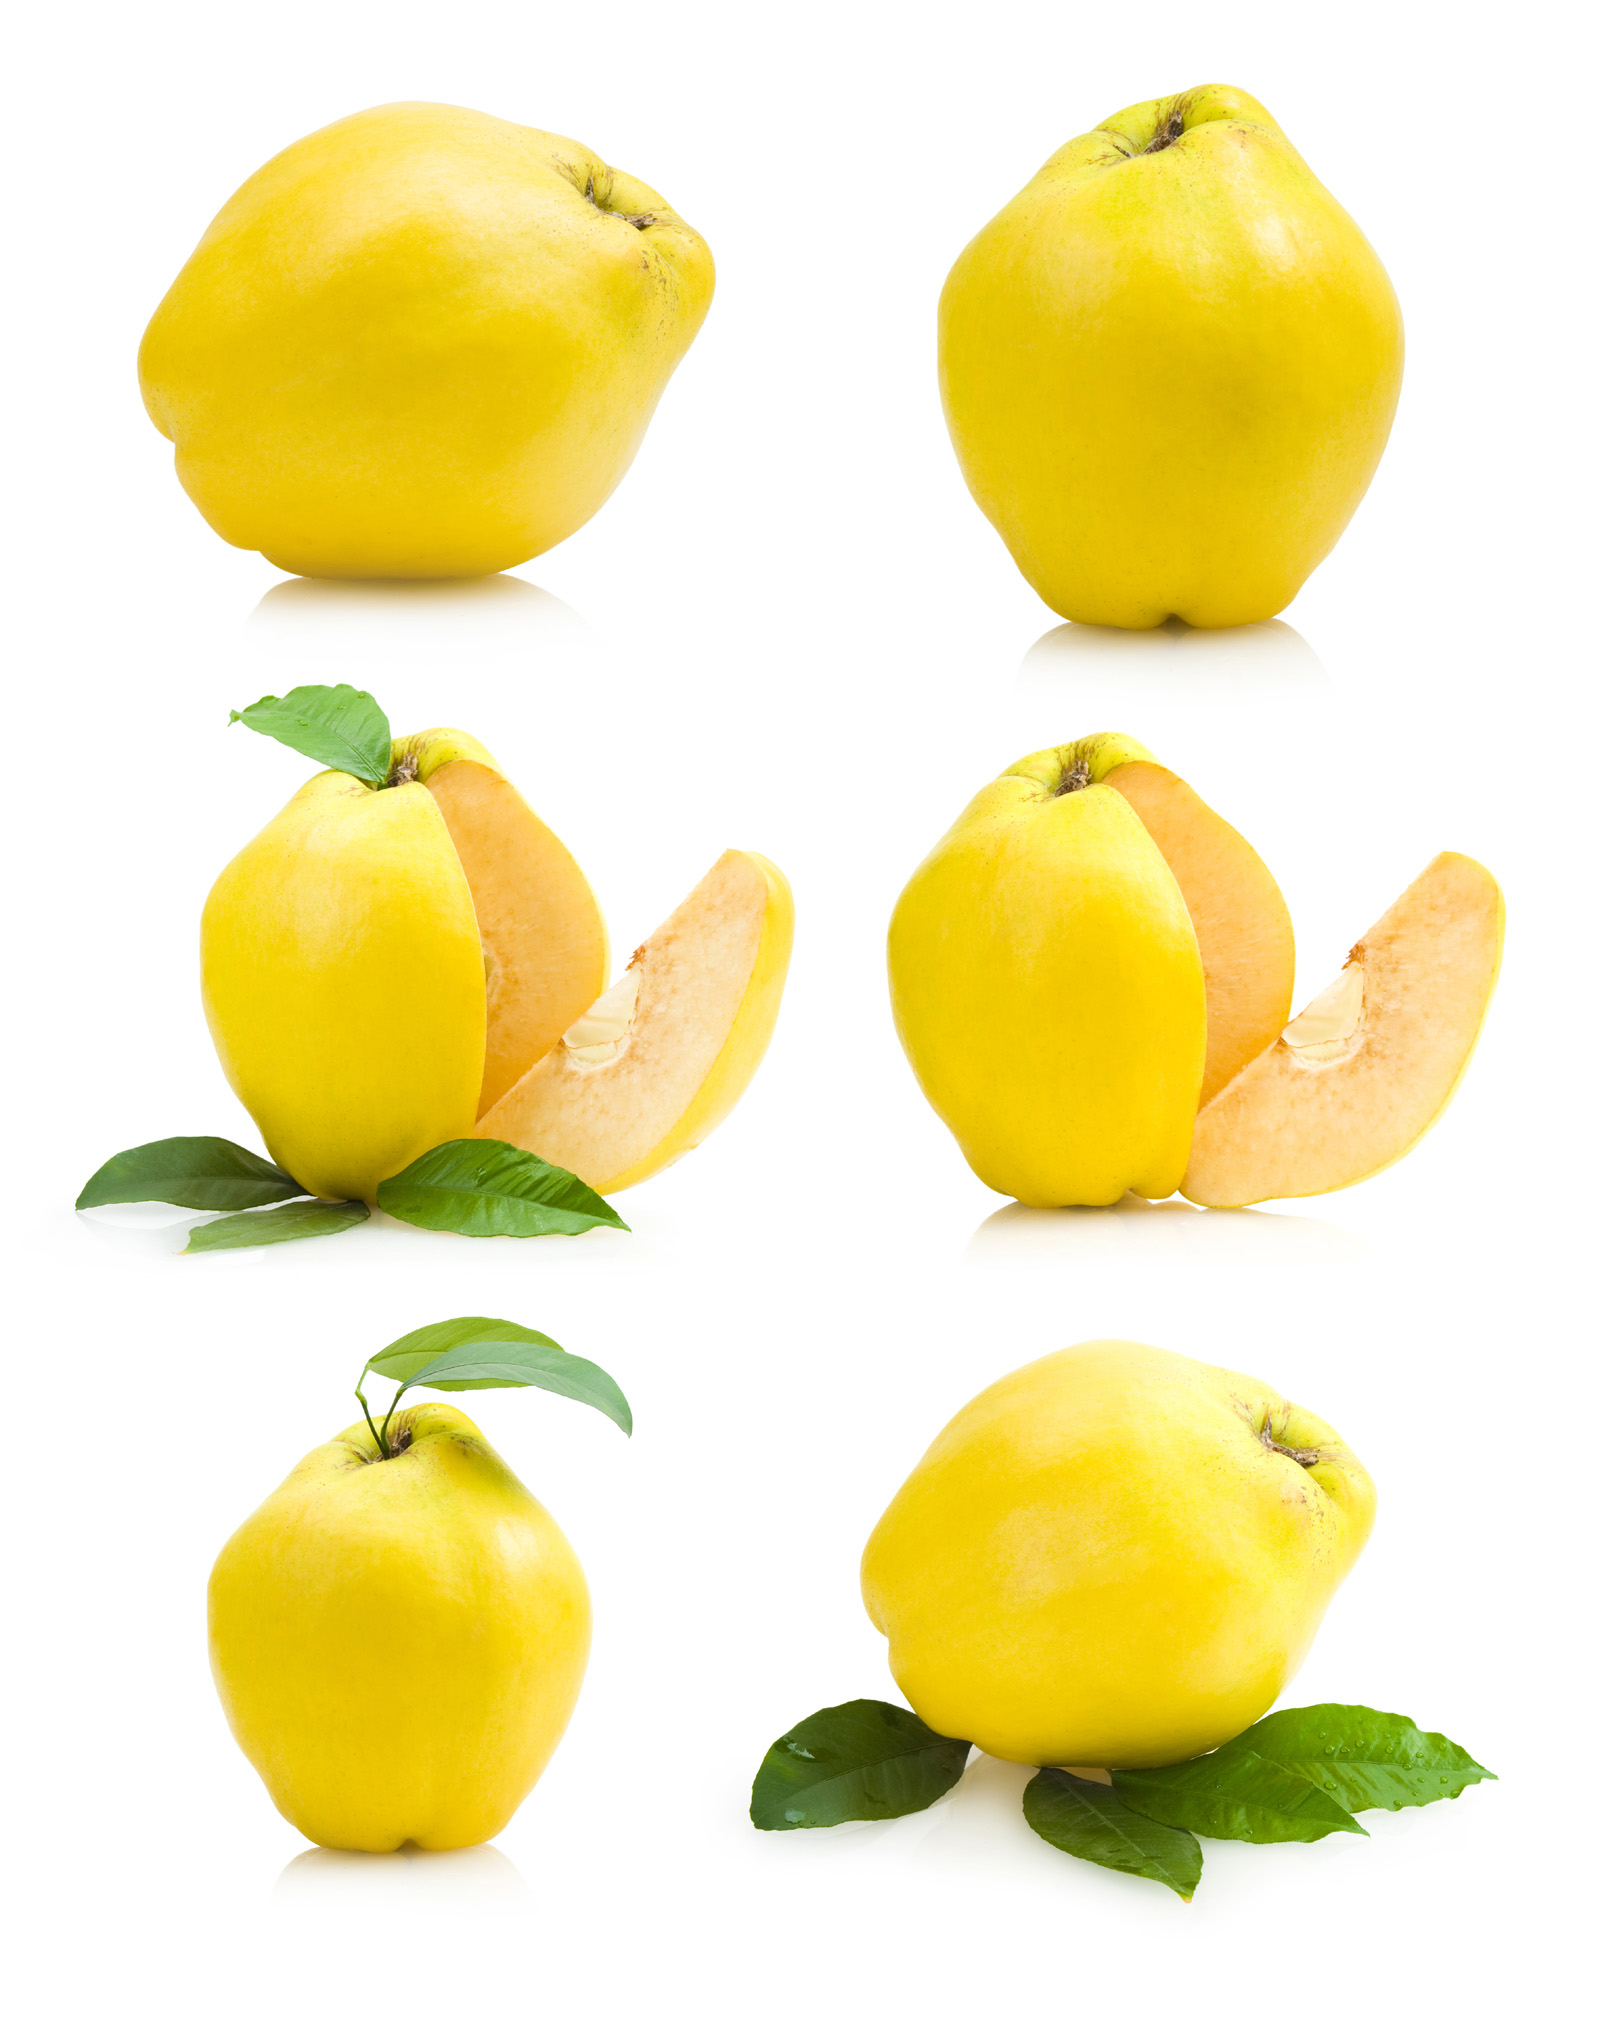 Yellow fresh fruit 50988 - Fruits and vegetables - Harvest season